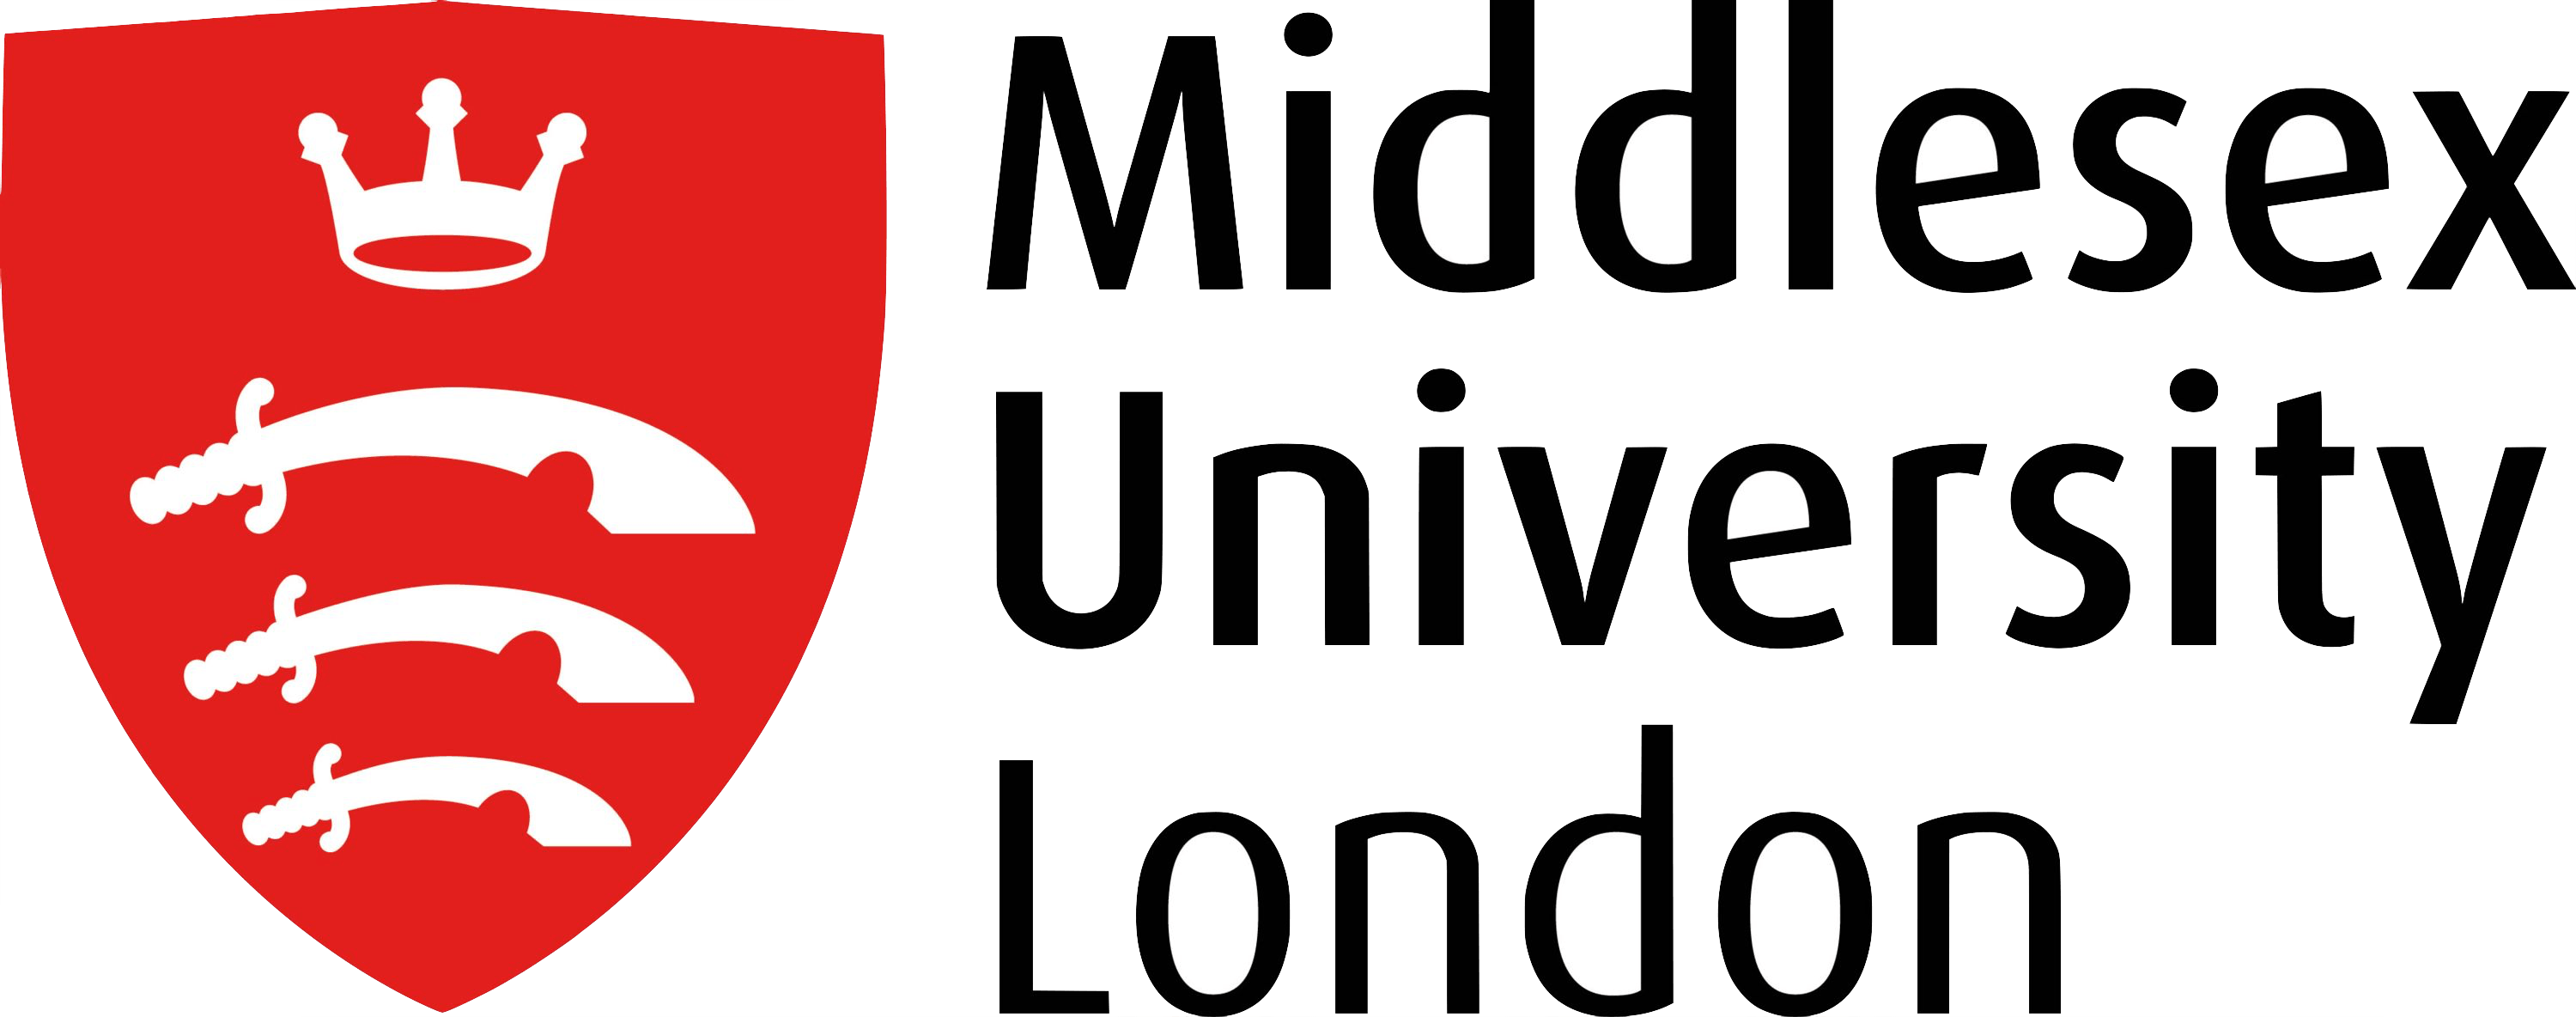 MDX Logo - Matlab download for Middlesex university students